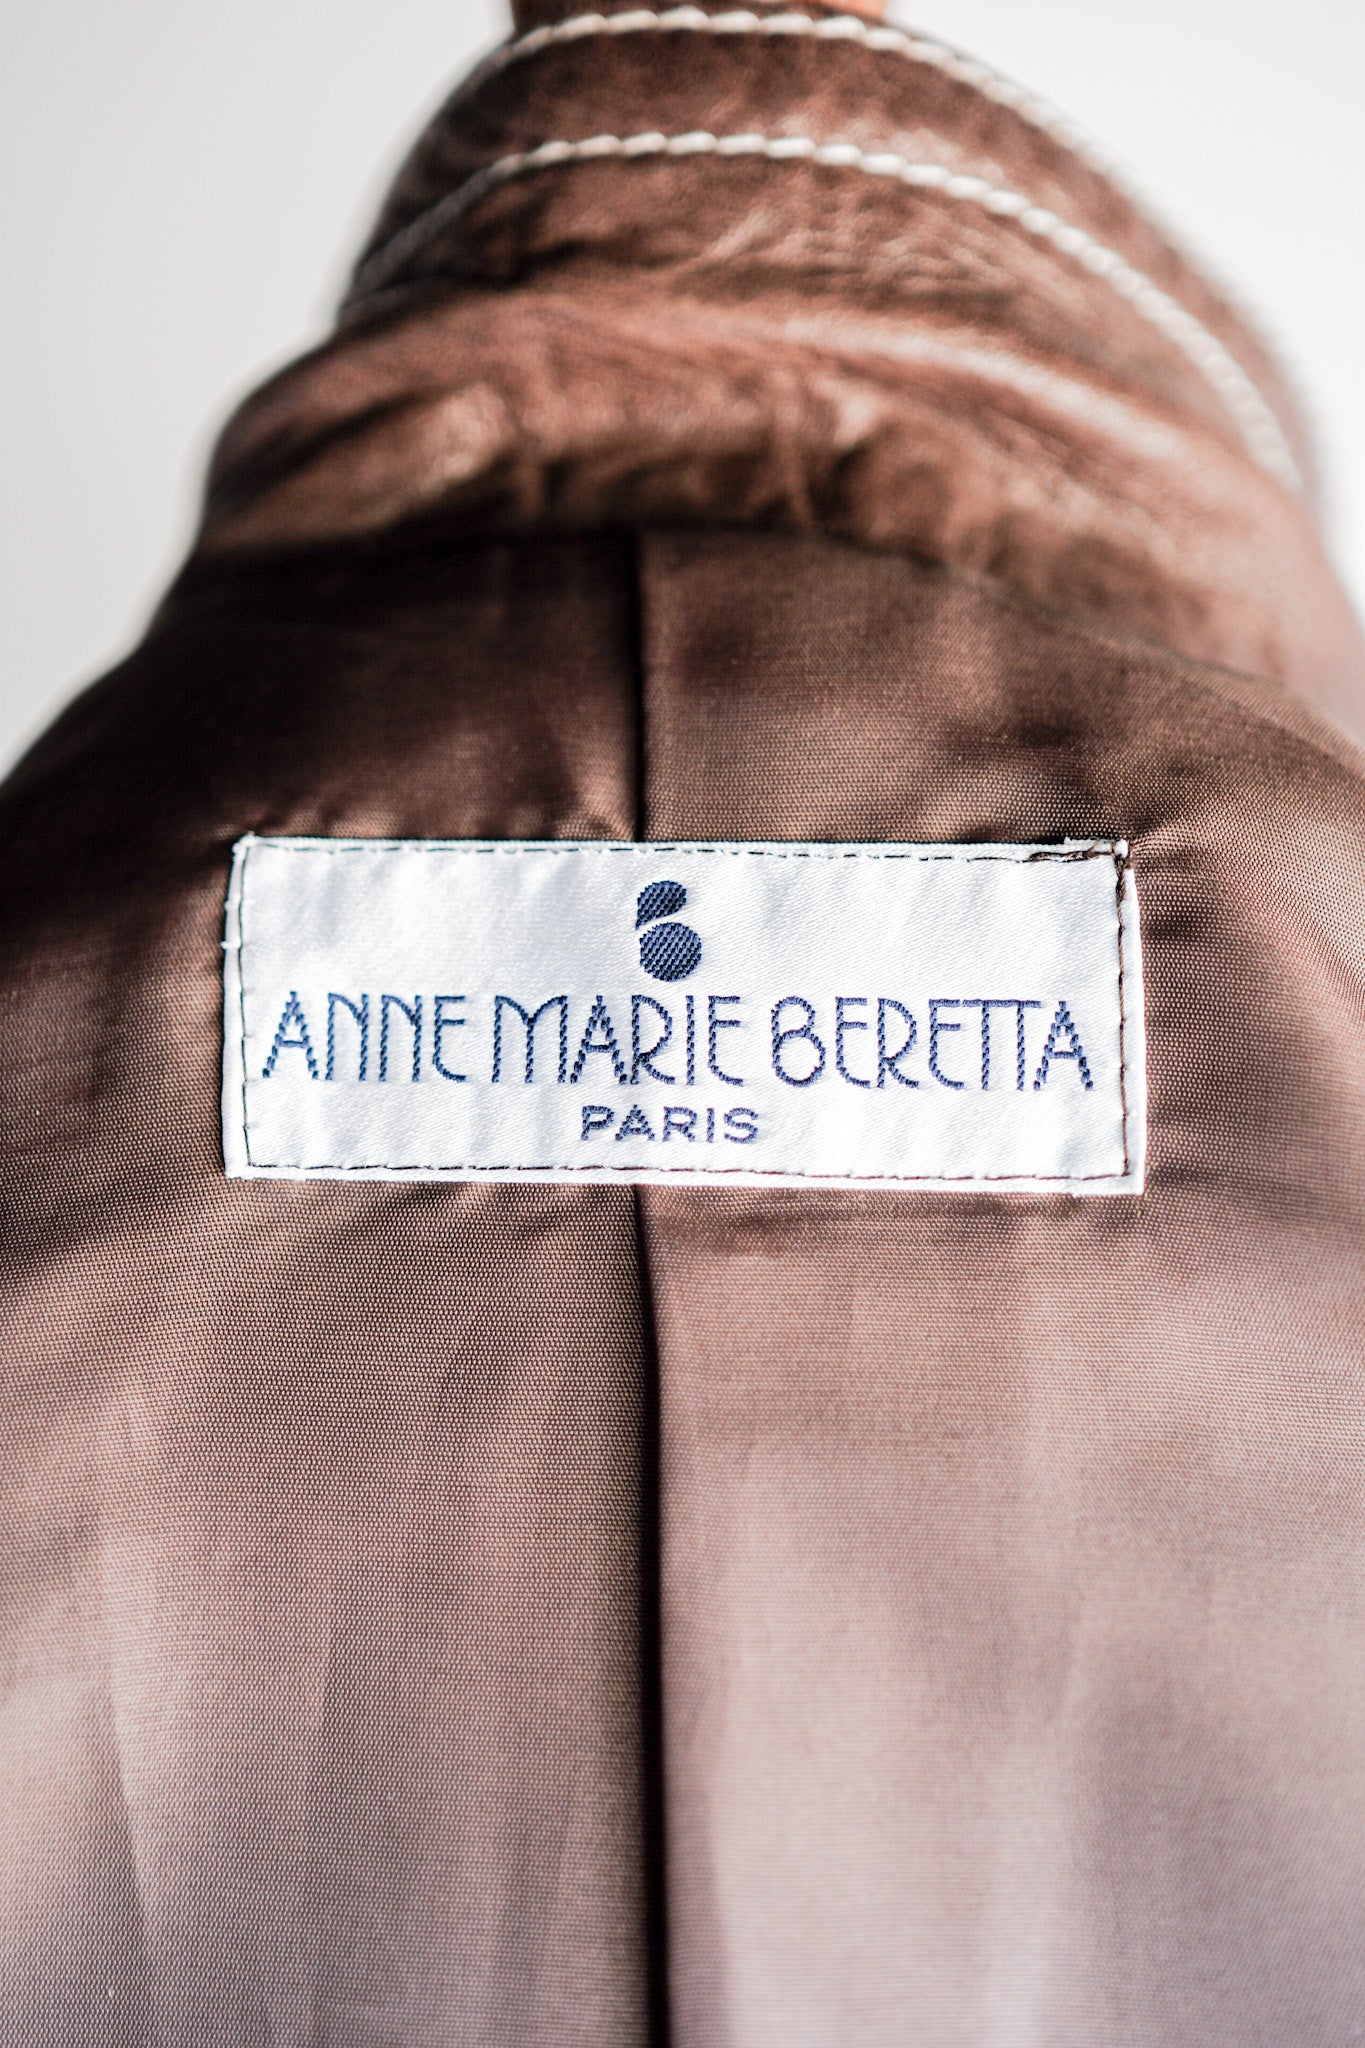 [~ 90's] Old Anne Marie Beretta en cuir de la veste.T42